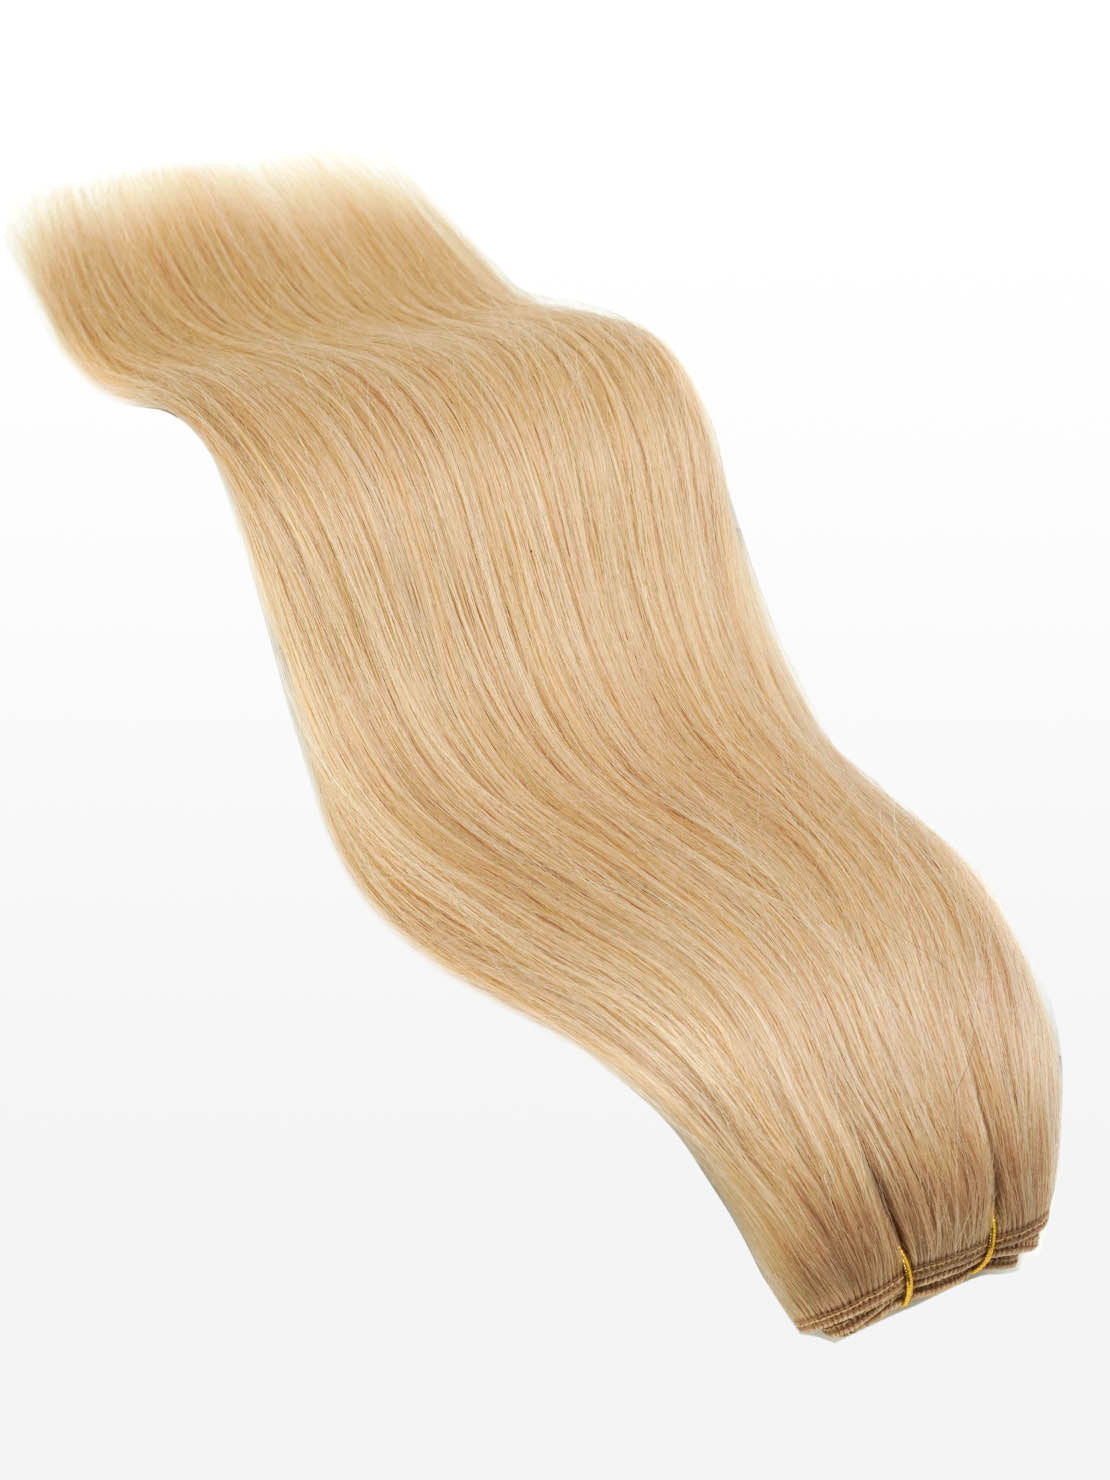 Weft Haartressen luxury - 100 Gramm - 50cm - professional Qualität product image - 91d184a745f81f6546f9ca43d549389ab42b8c0e73095930339c4295527e218c